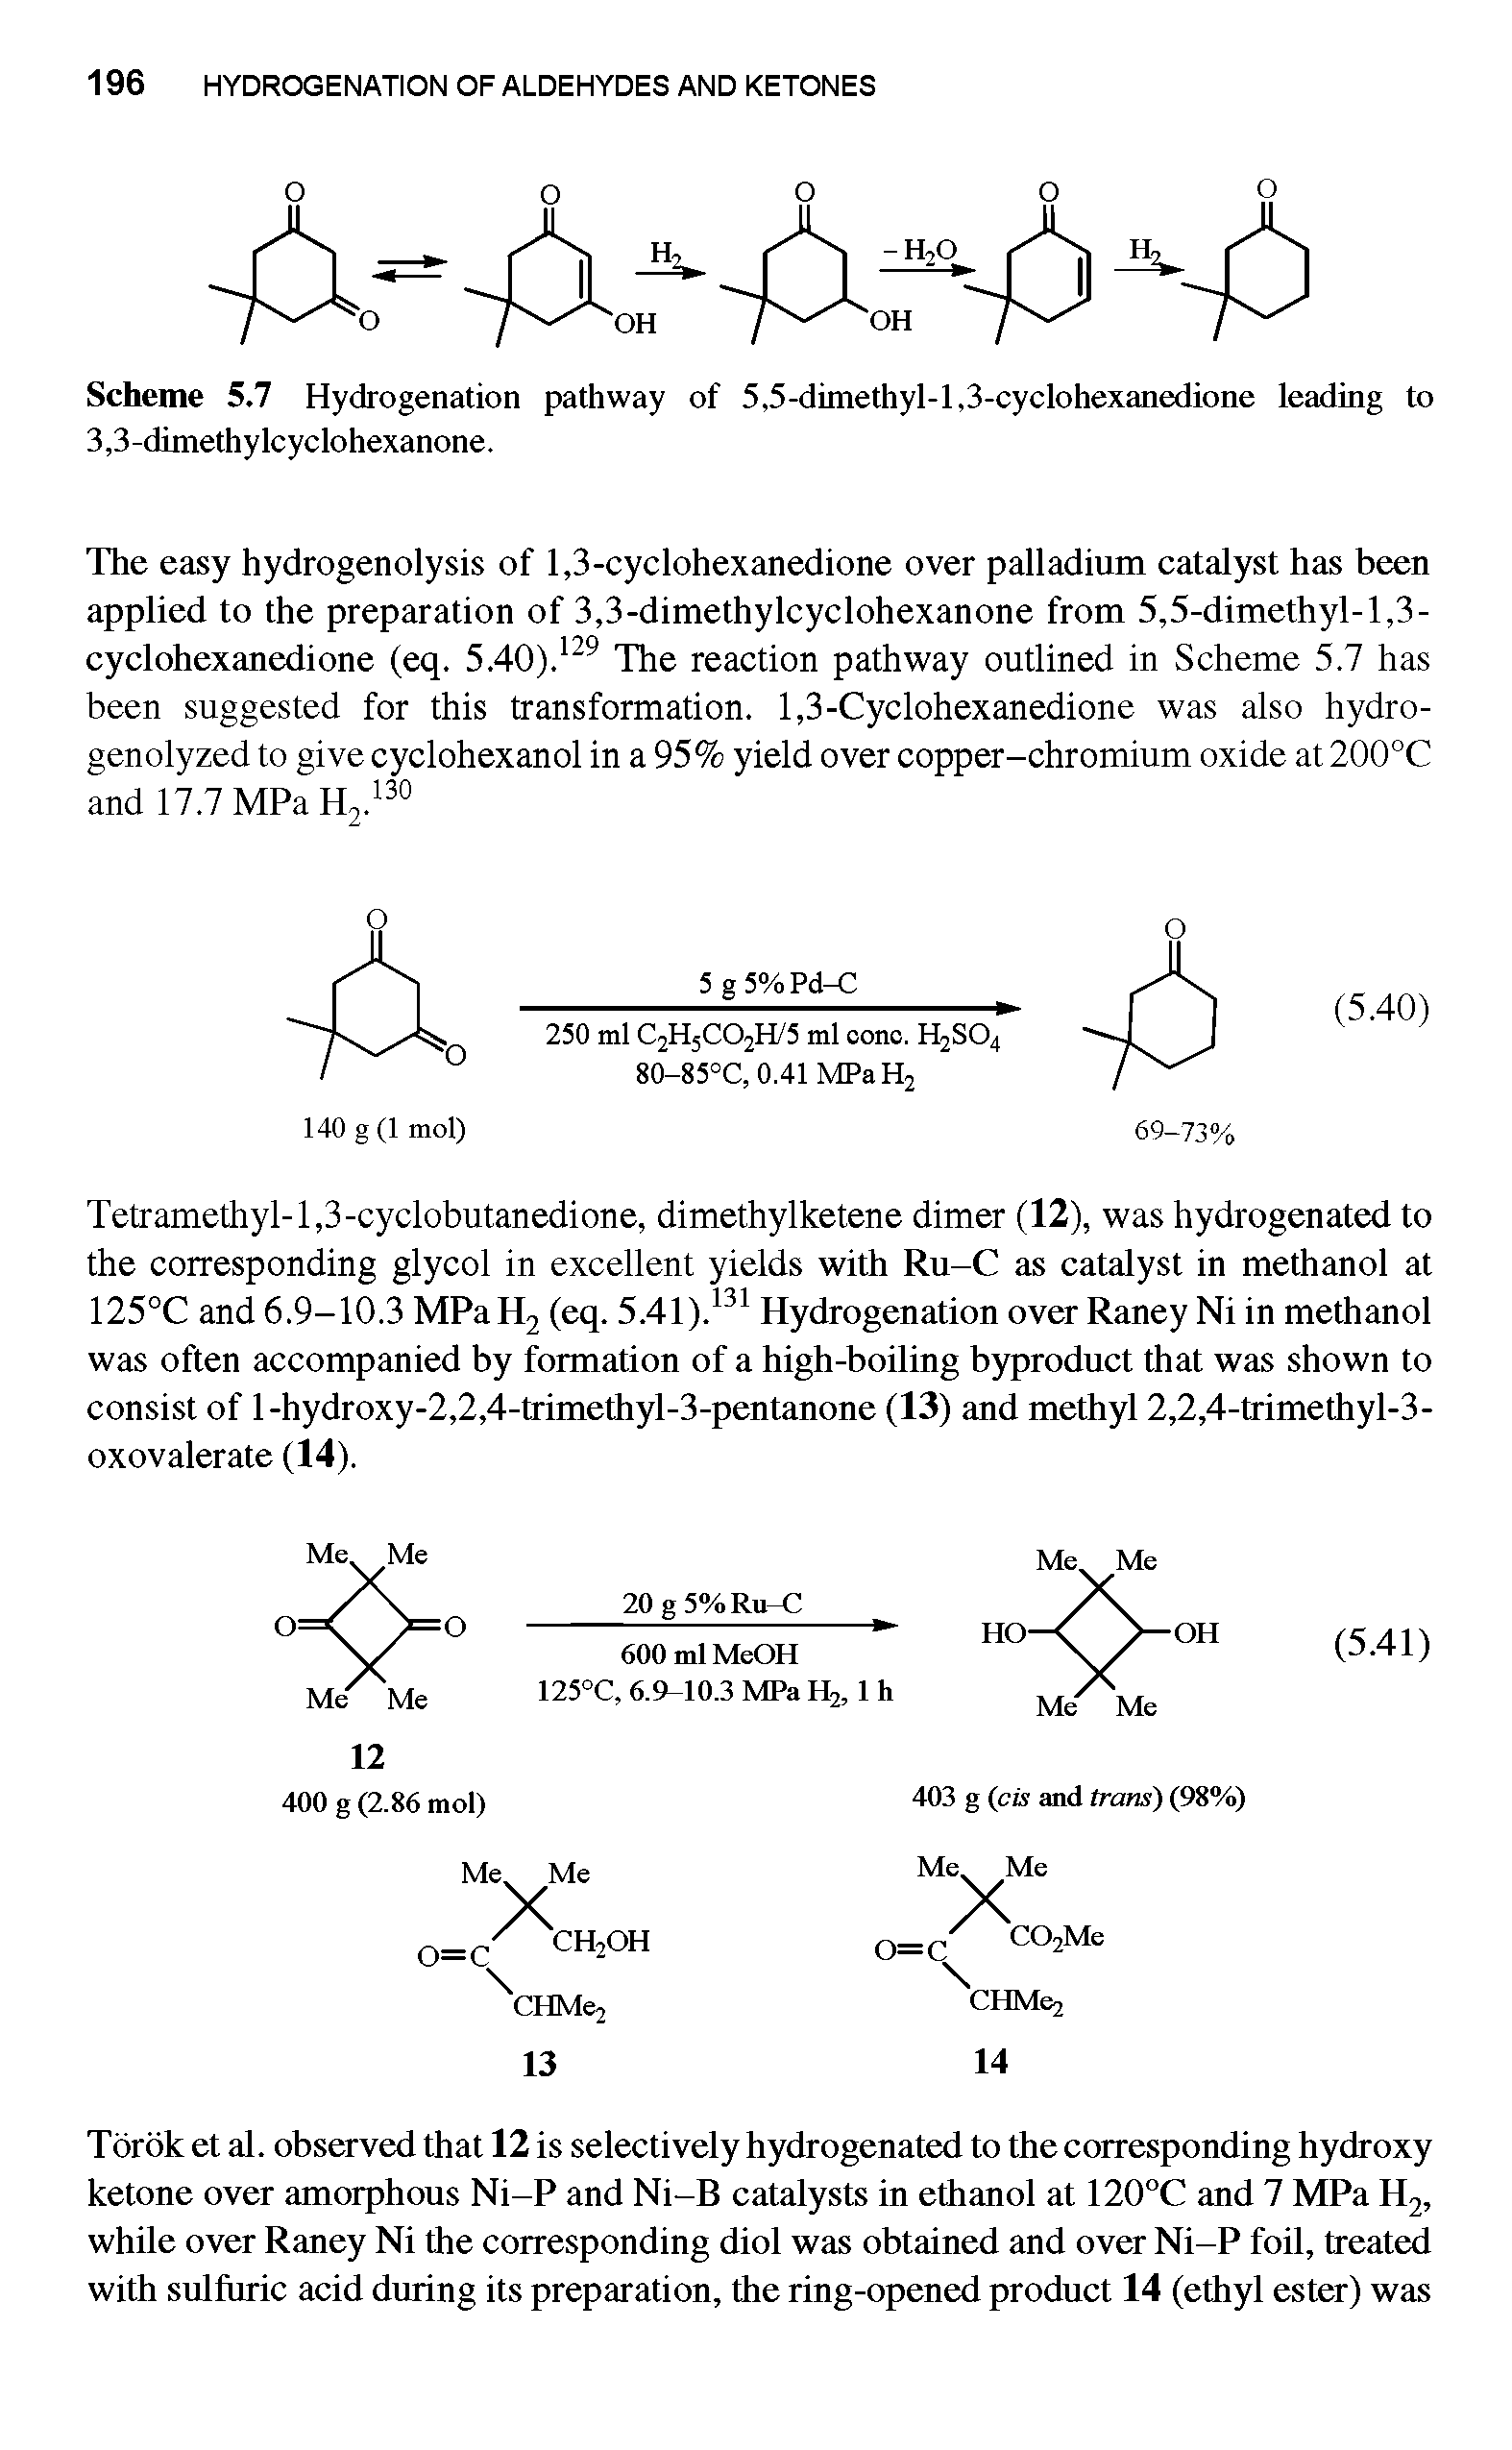 Scheme 5.7 Hydrogenation pathway of 5,5-dimethyl-l,3-cyclohexanedione leading to 3,3-dimethylcyclohexanone.